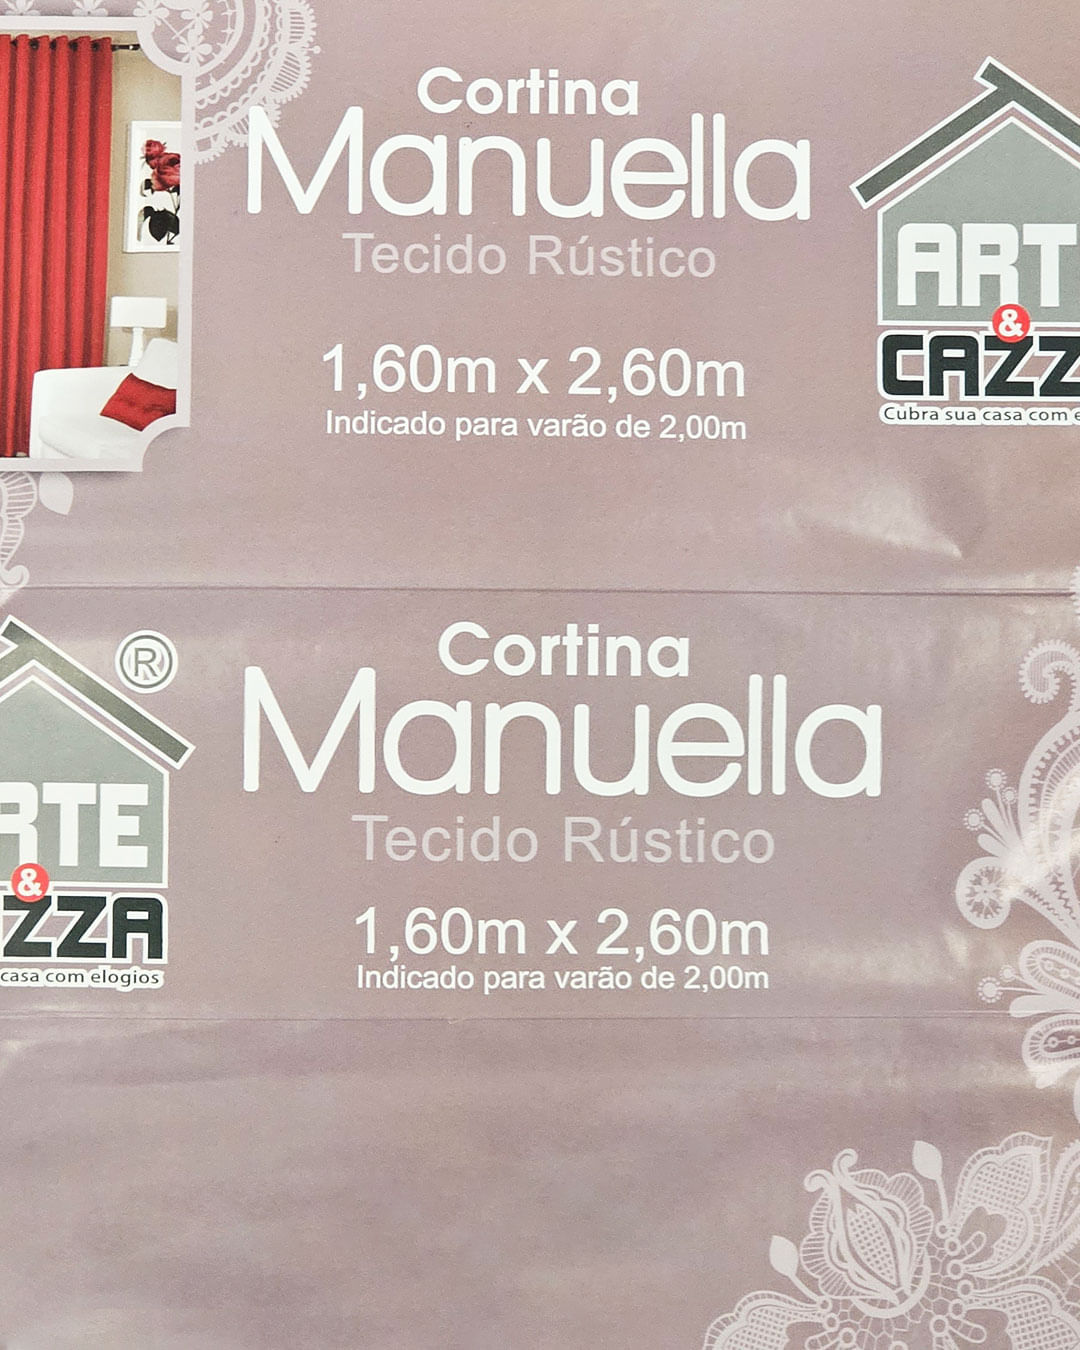 Cortina-Manuella-Arte-e-Cazza-Varao-Ate-2m-Vermelha